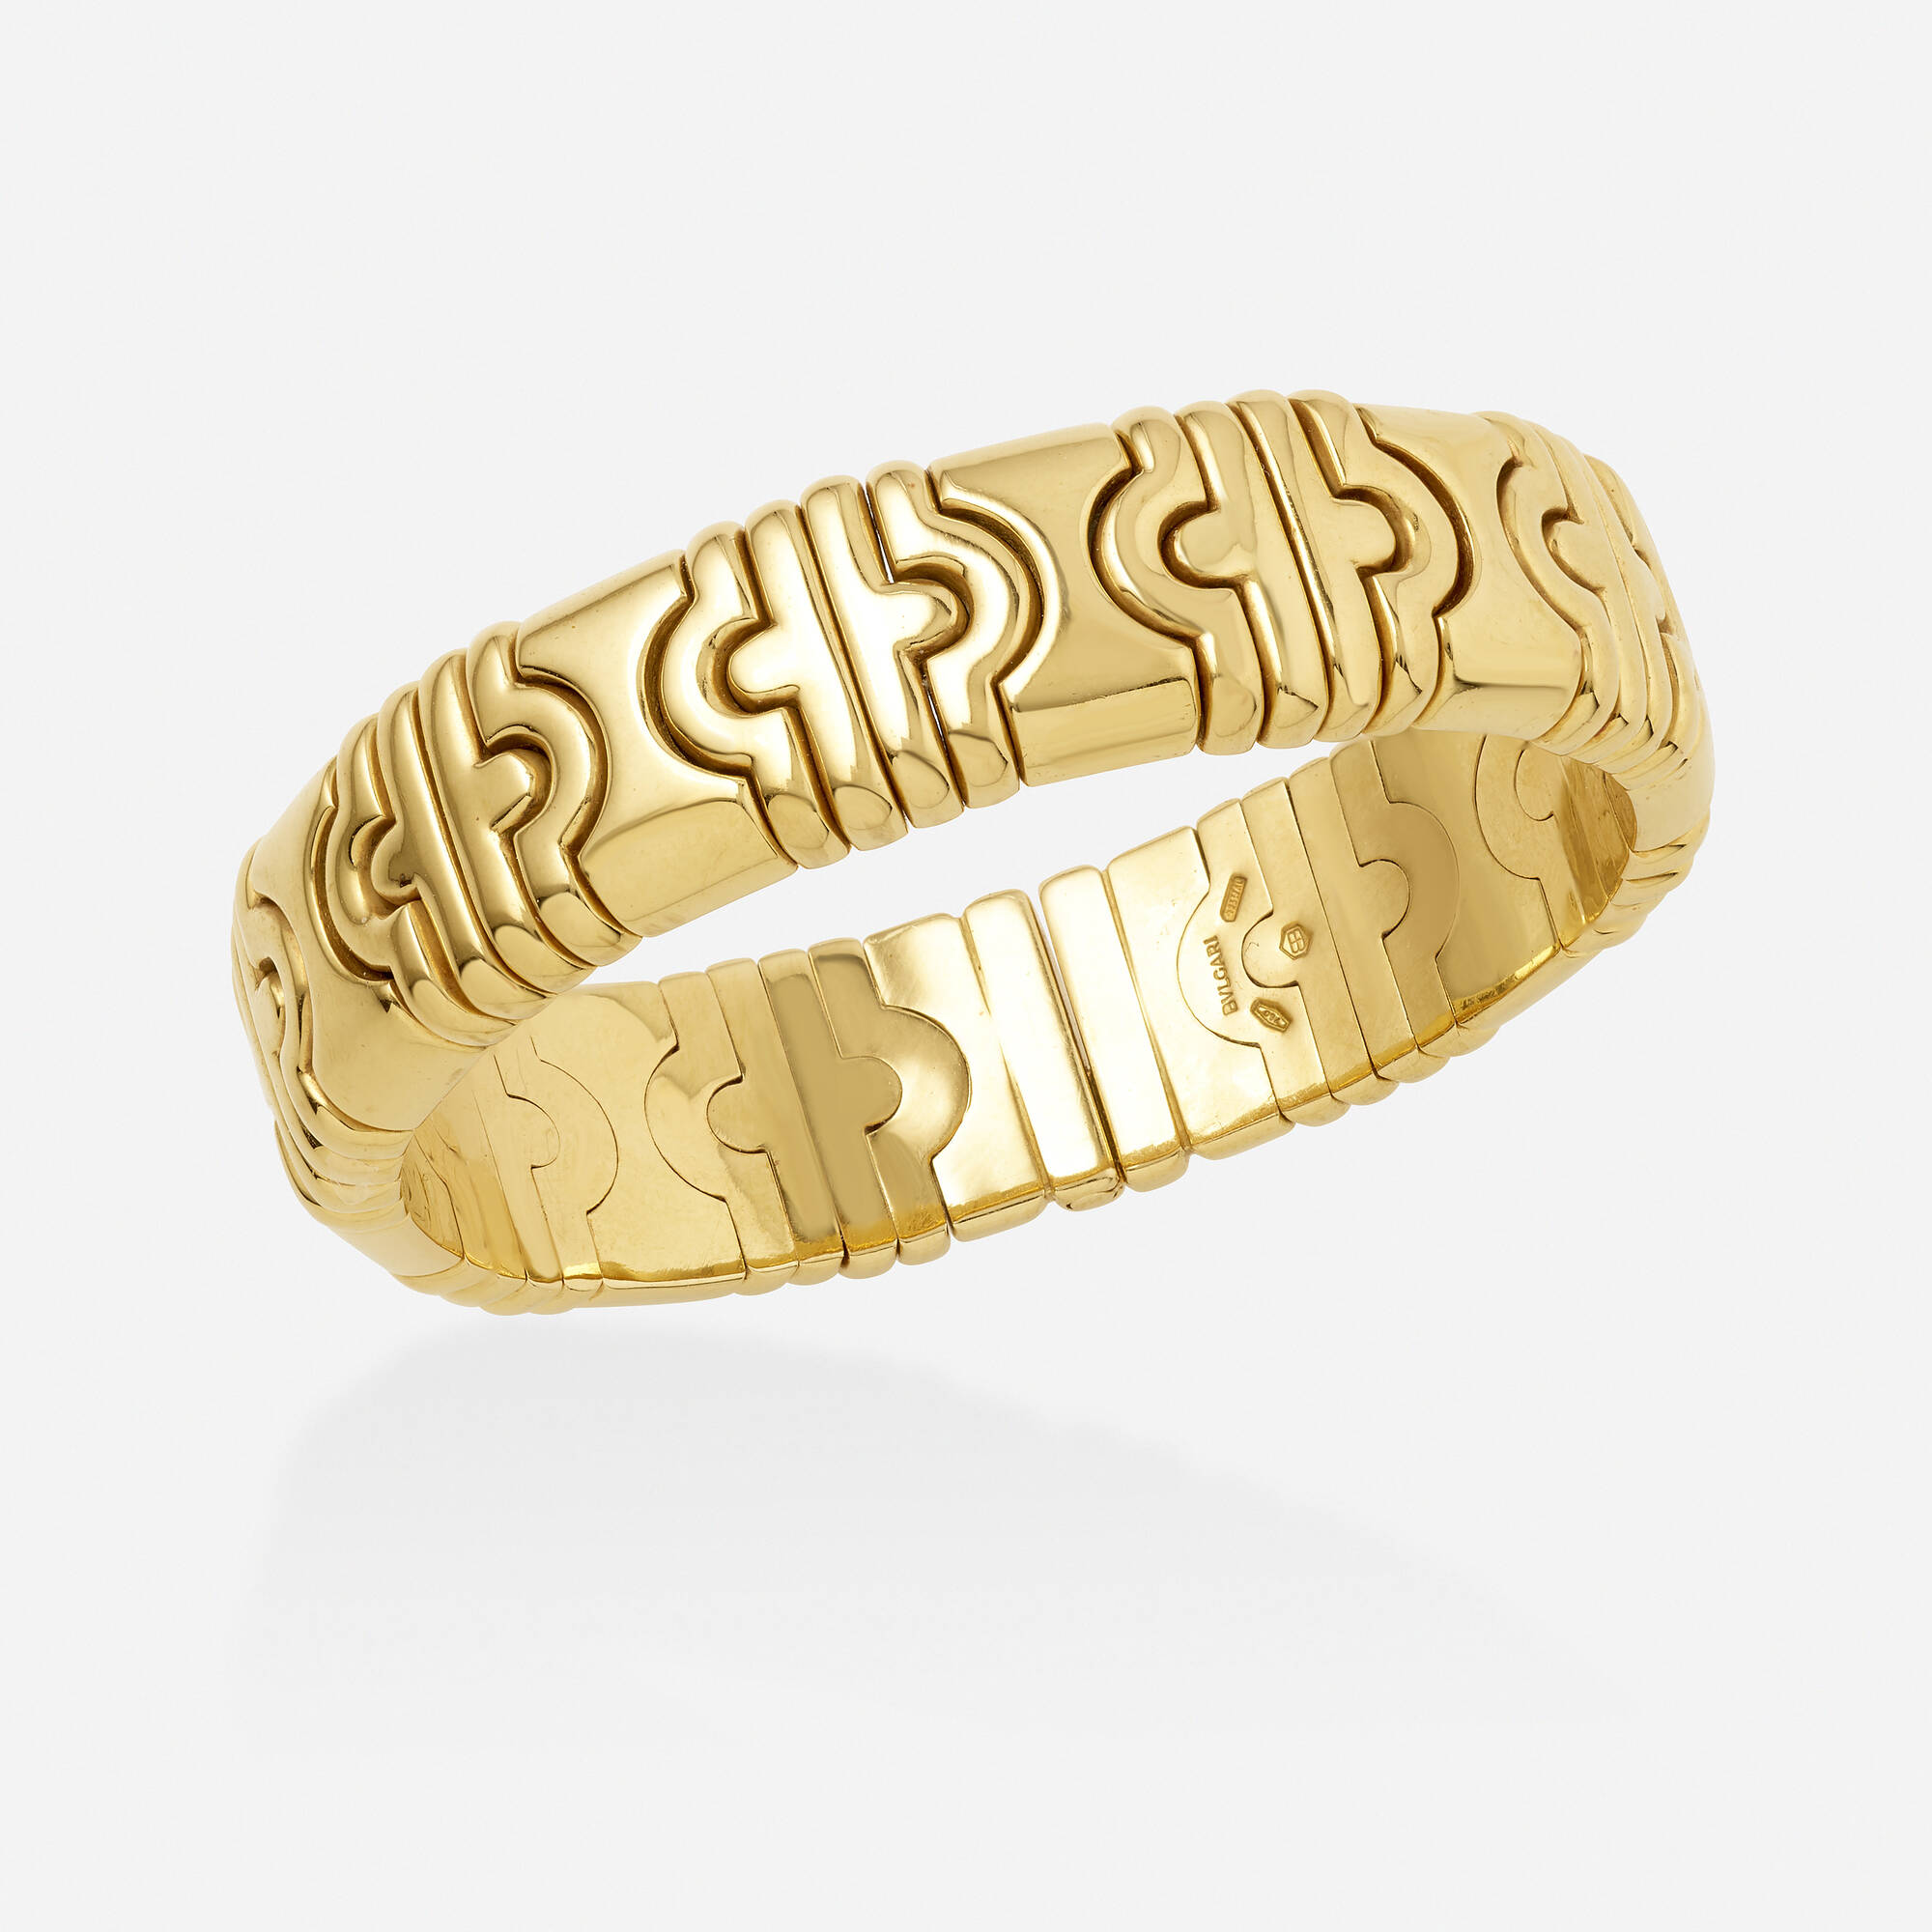 Bvlgari Parenthesis 18K Gold Cuff Bangle Bracelet